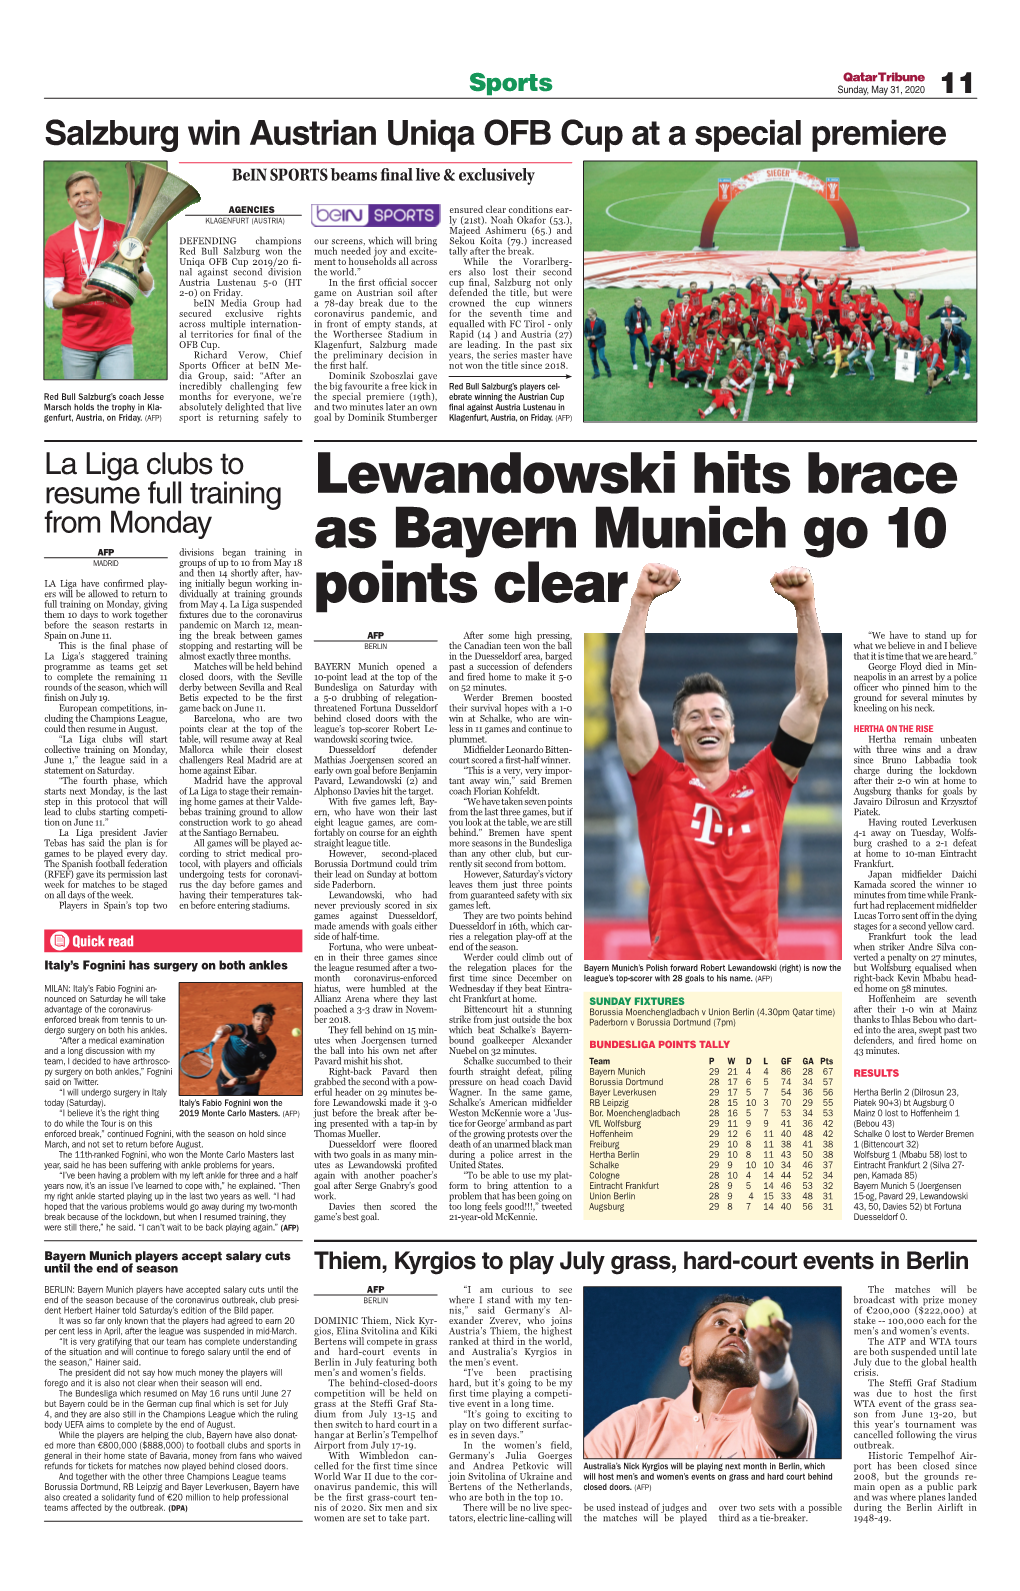 Lewandowski Hits Brace As Bayern Munich Go 10 Points Clear